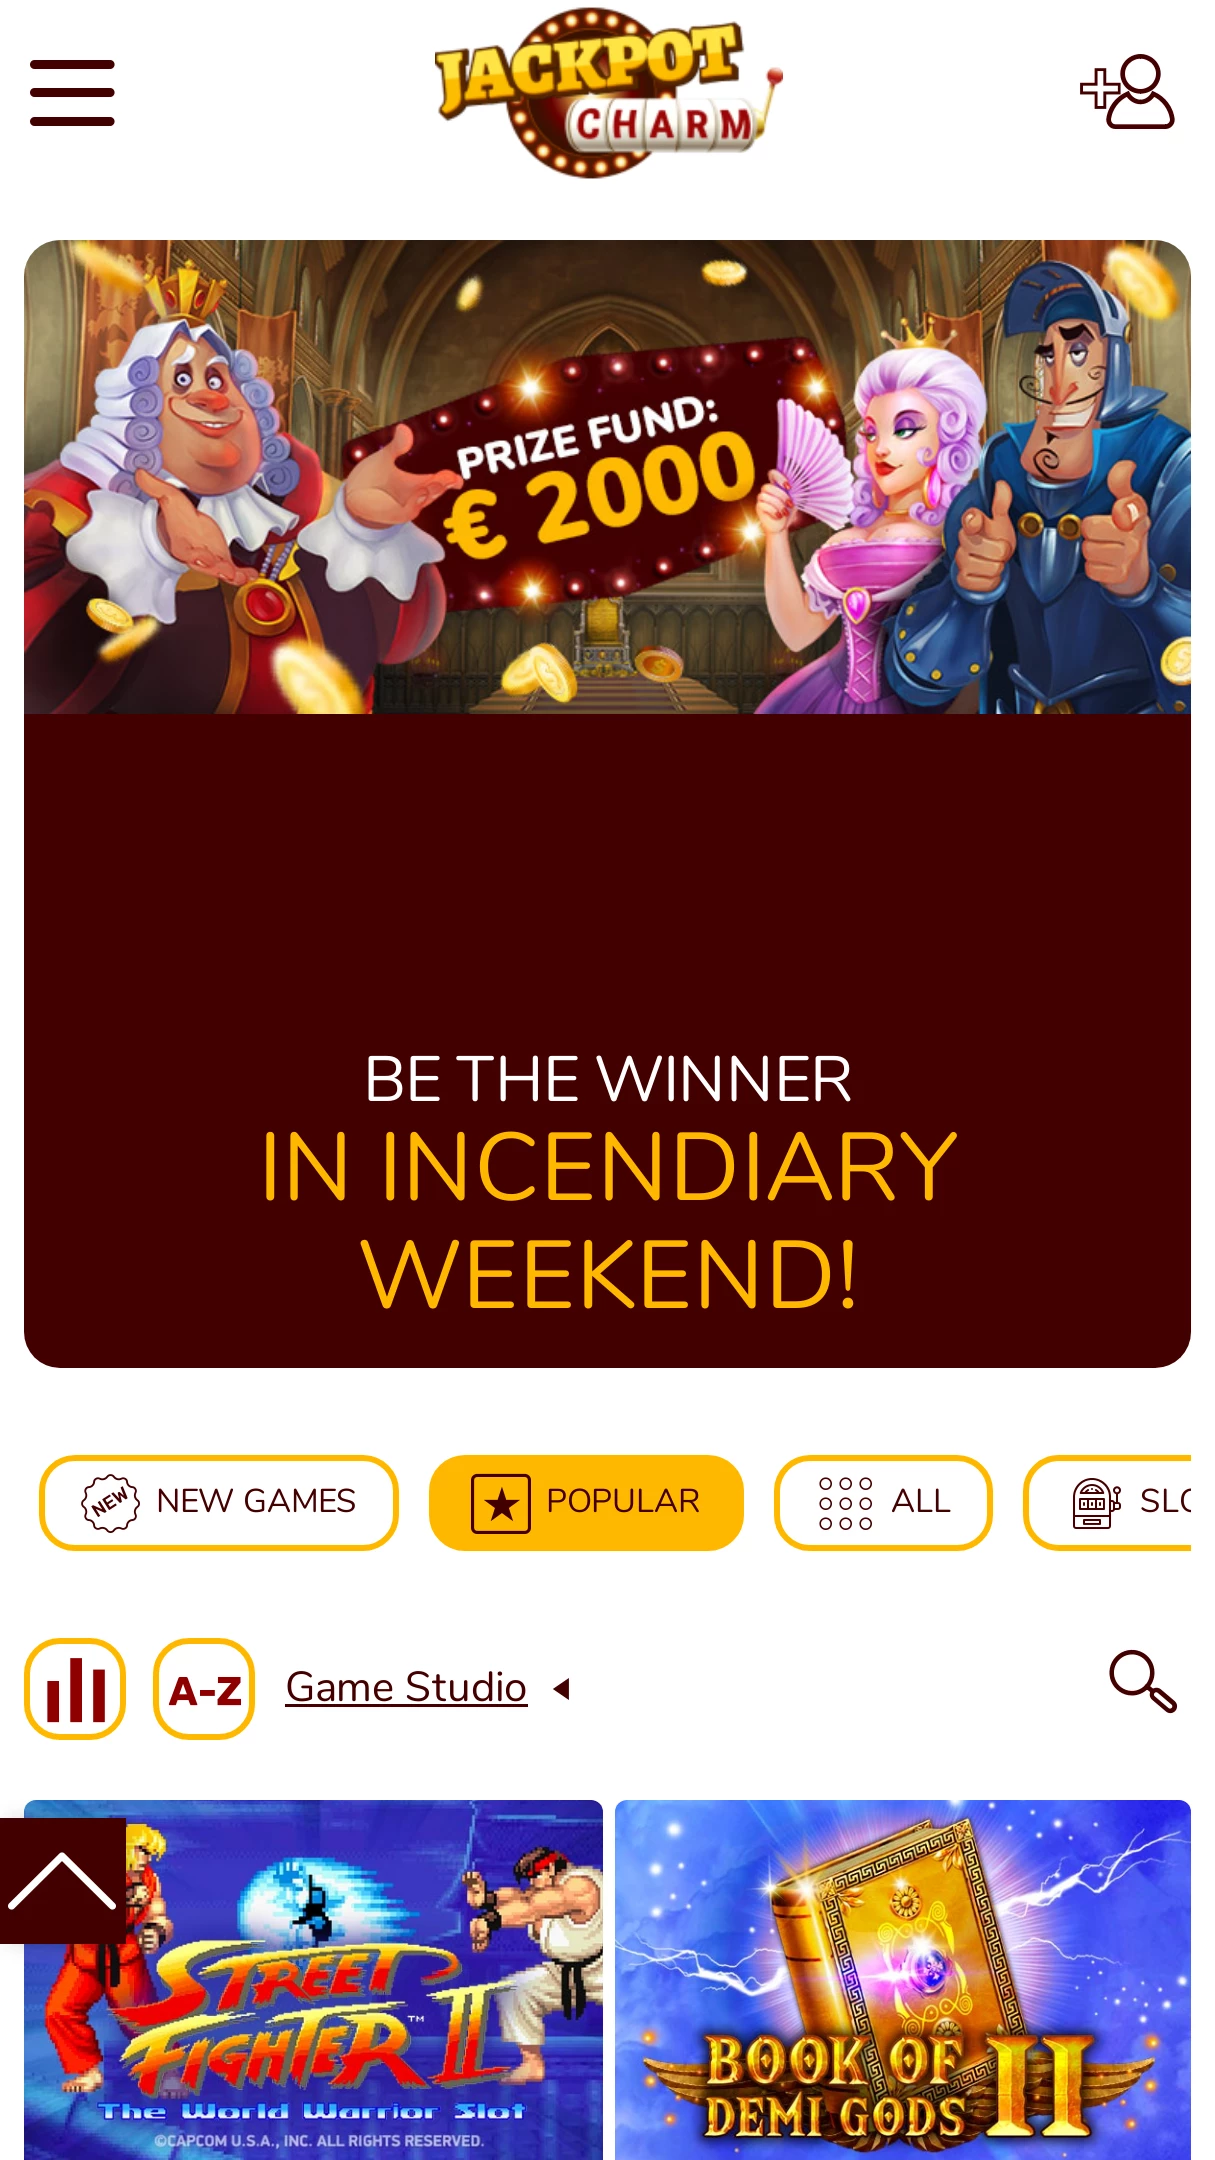 Jackpot Charm Casino mobile